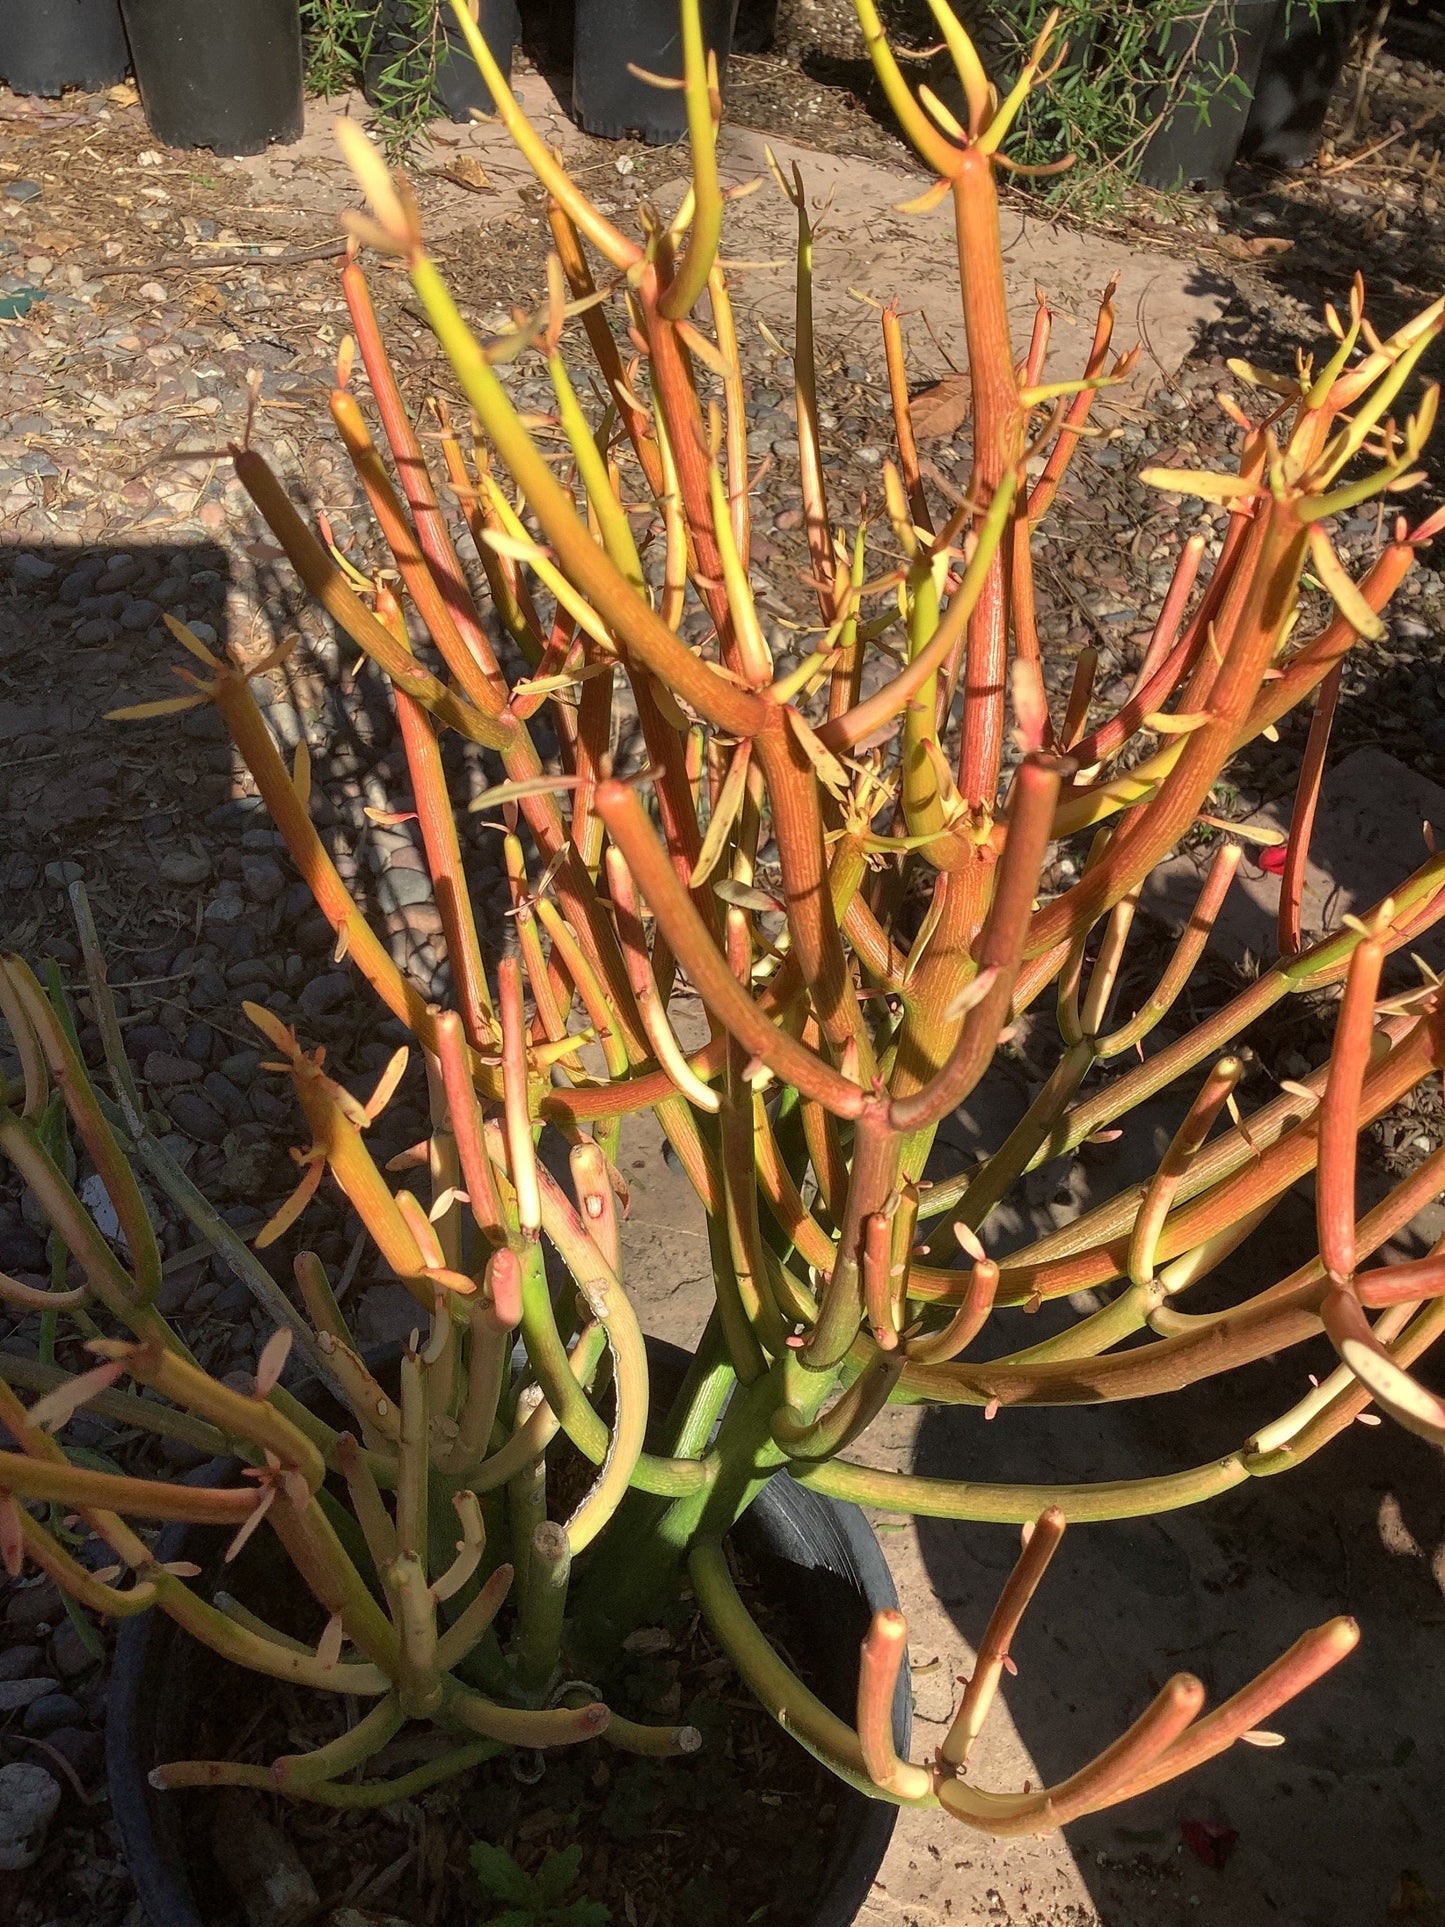 4 Sticks on Fire Firesticks Pencil Cactus Euphorbia tirucalli Plants